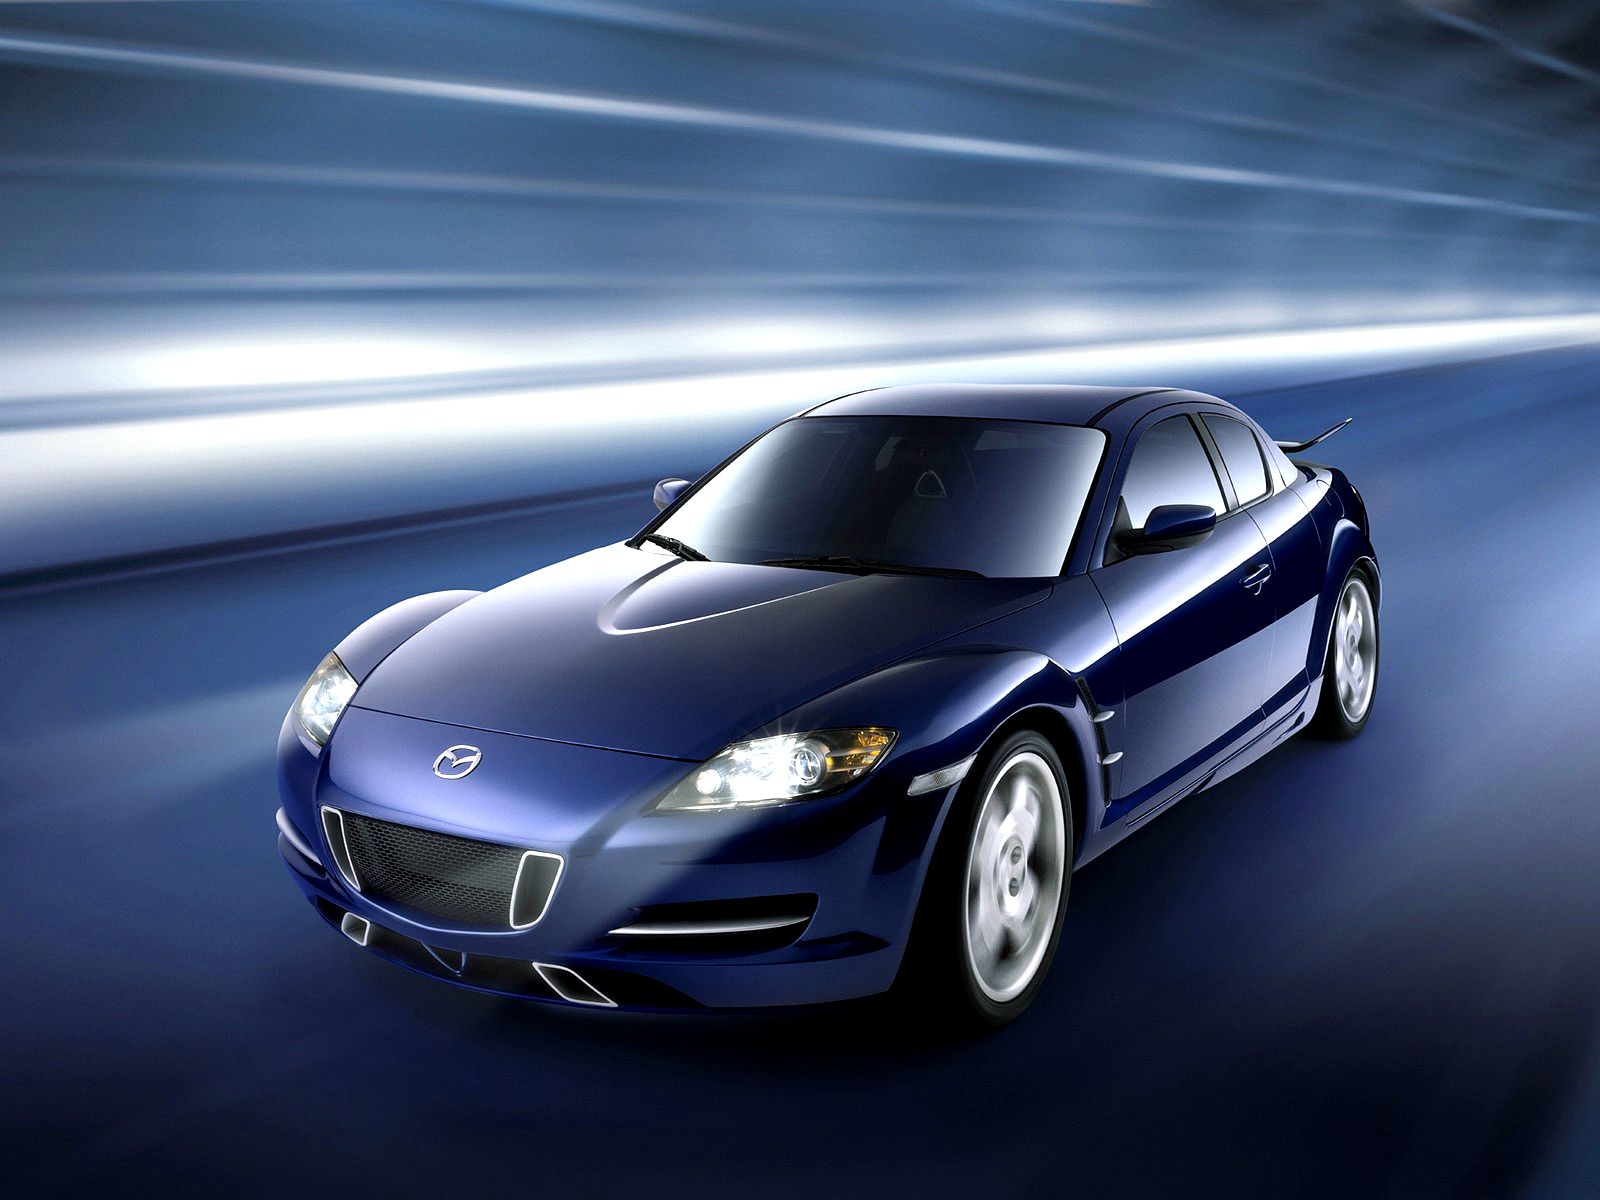 Mazda Logo Wallpaper - image